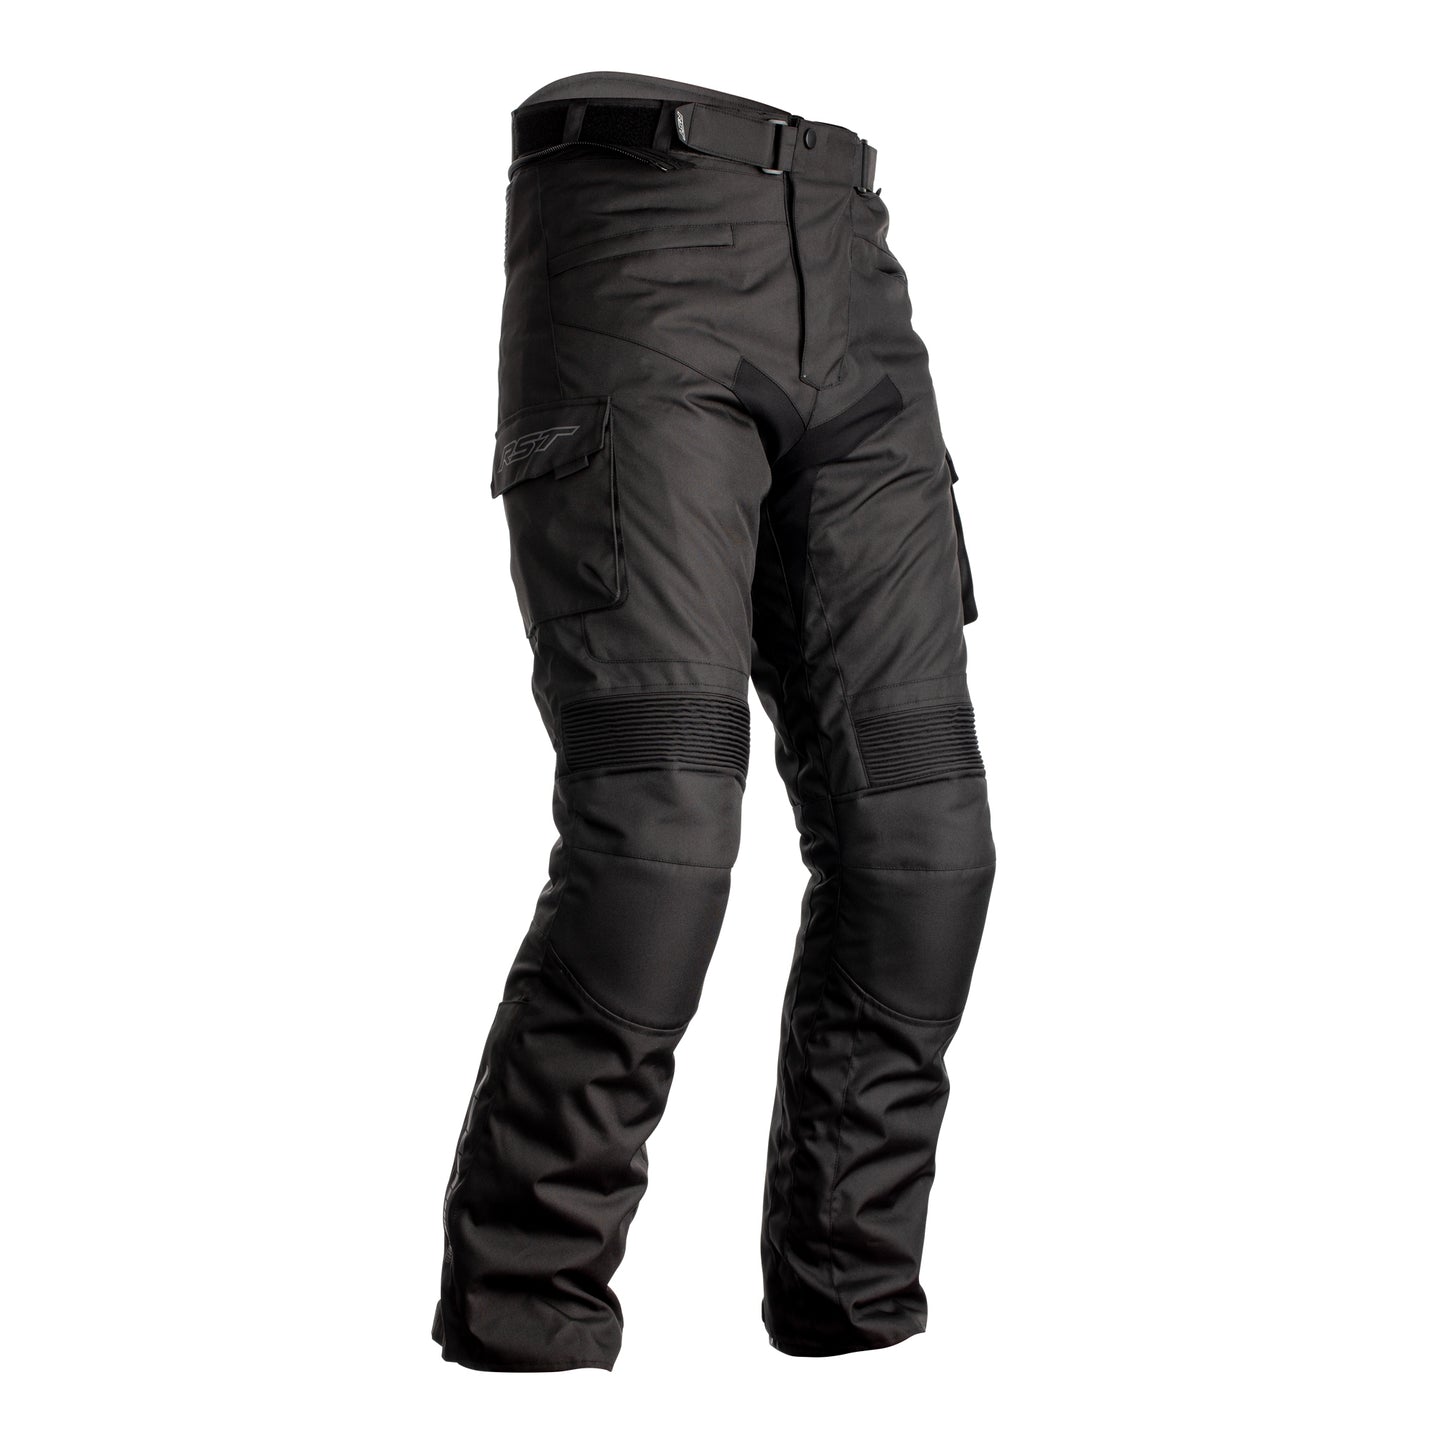 RST Atlas (CE) Men's Waterproof Textile - Regular Length - Black